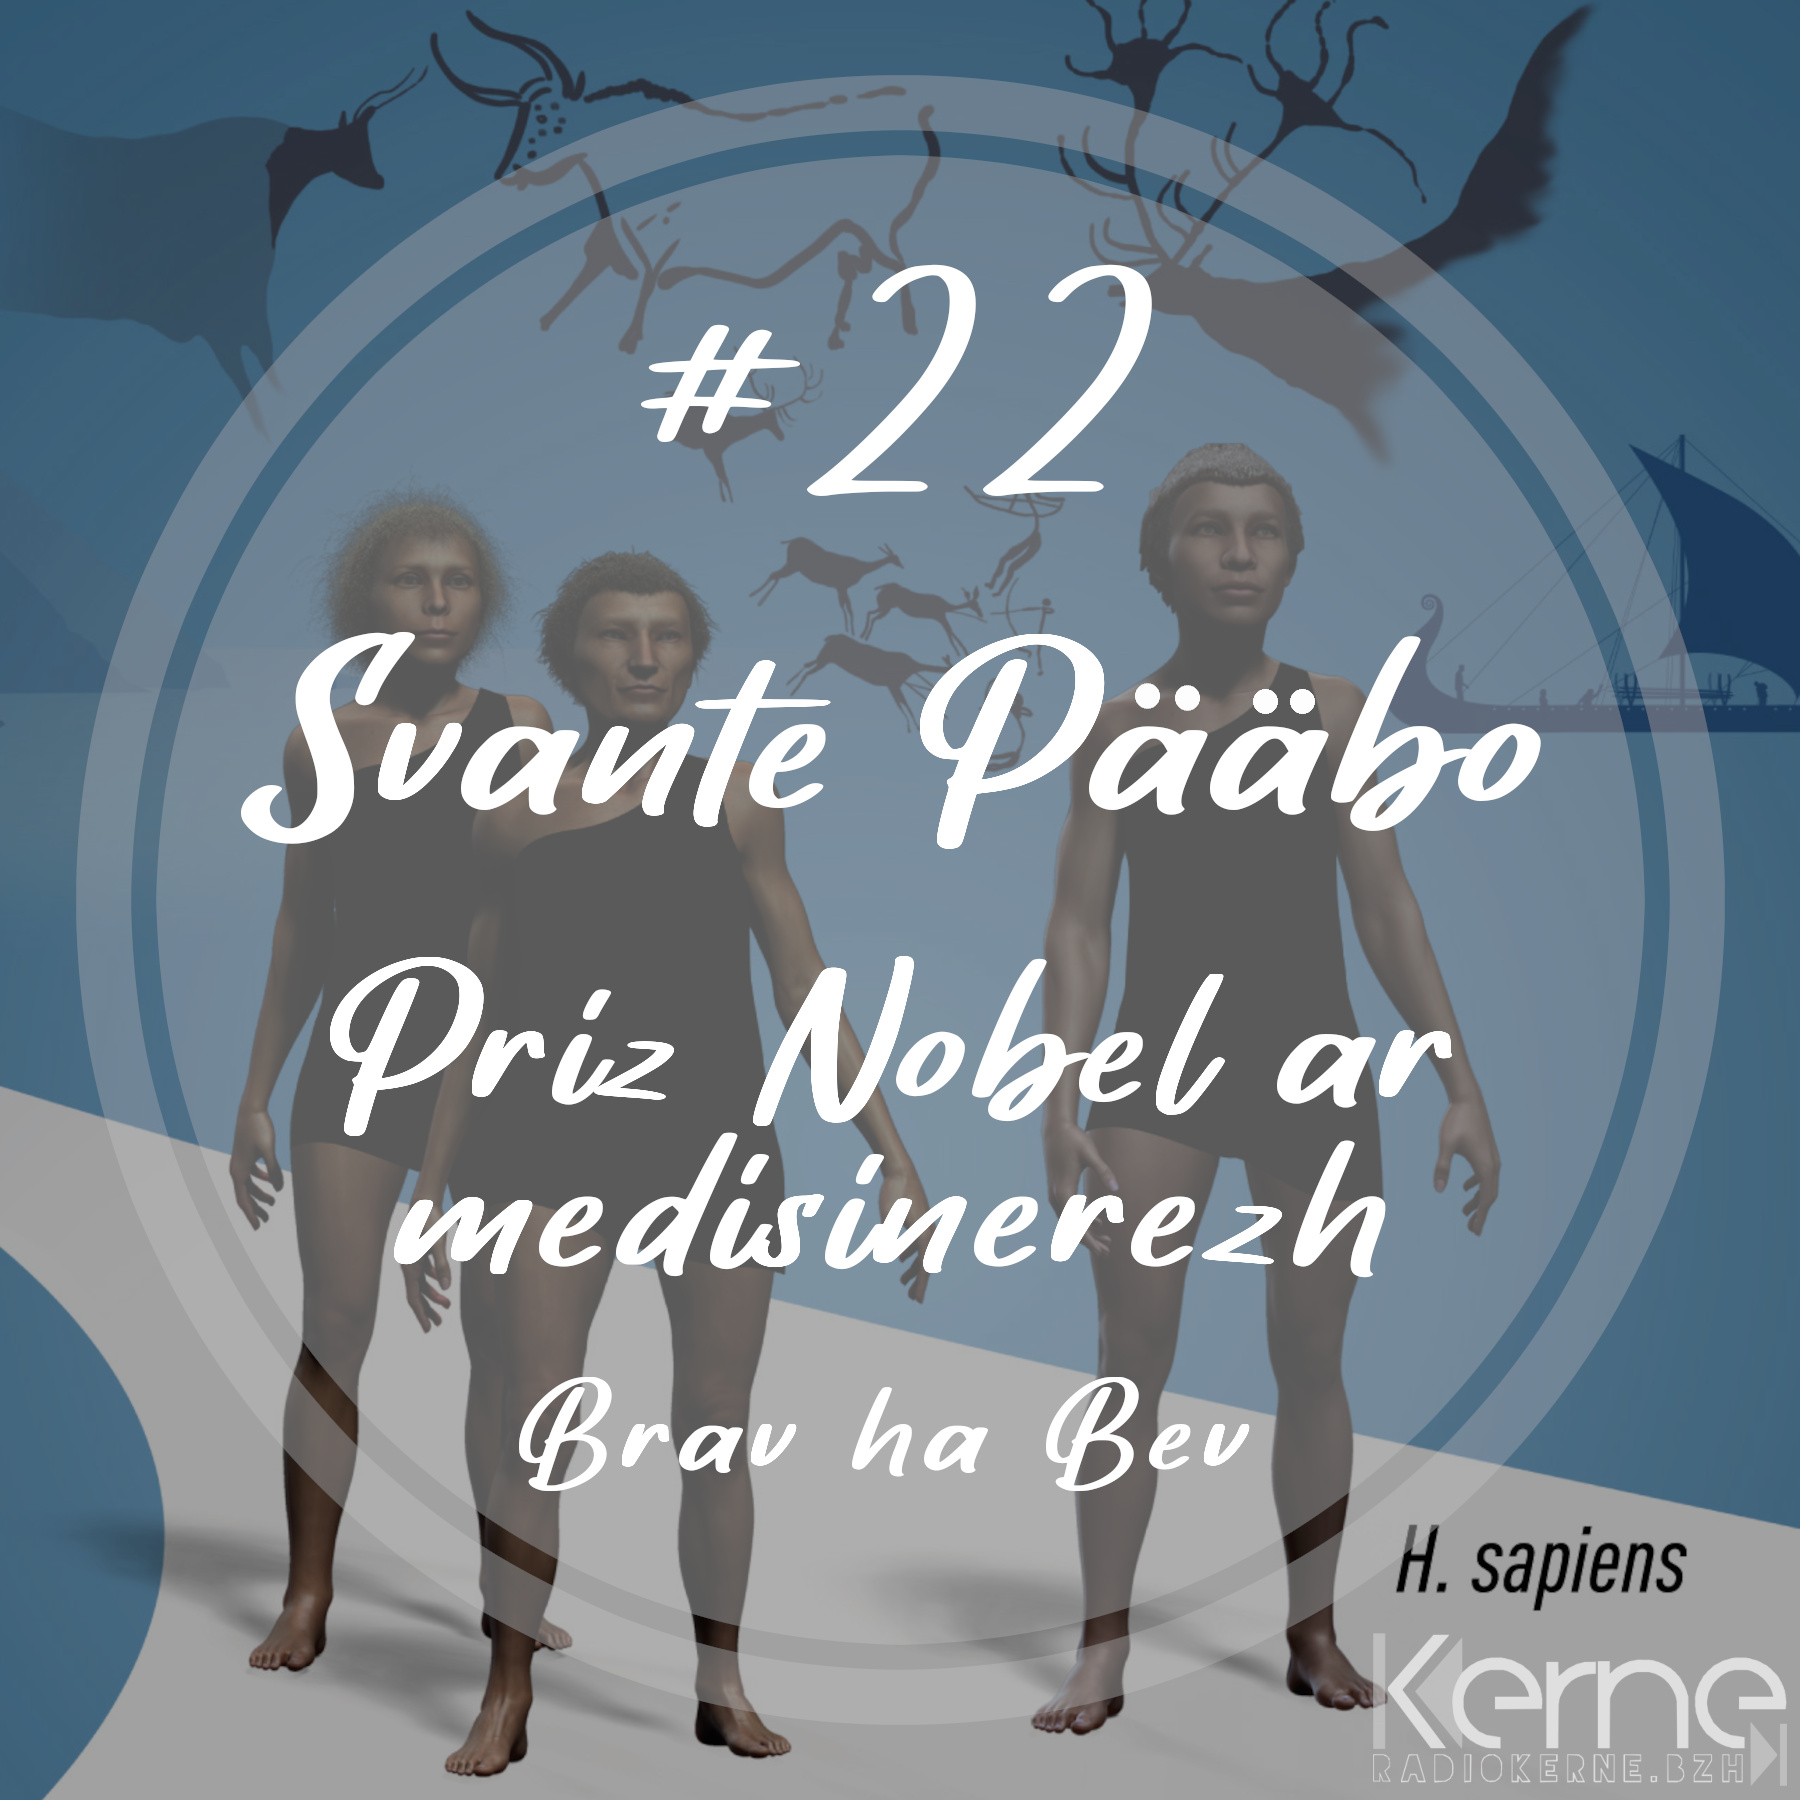 #22 Svante Pääbo - Priz Nobel ar medisinerezh